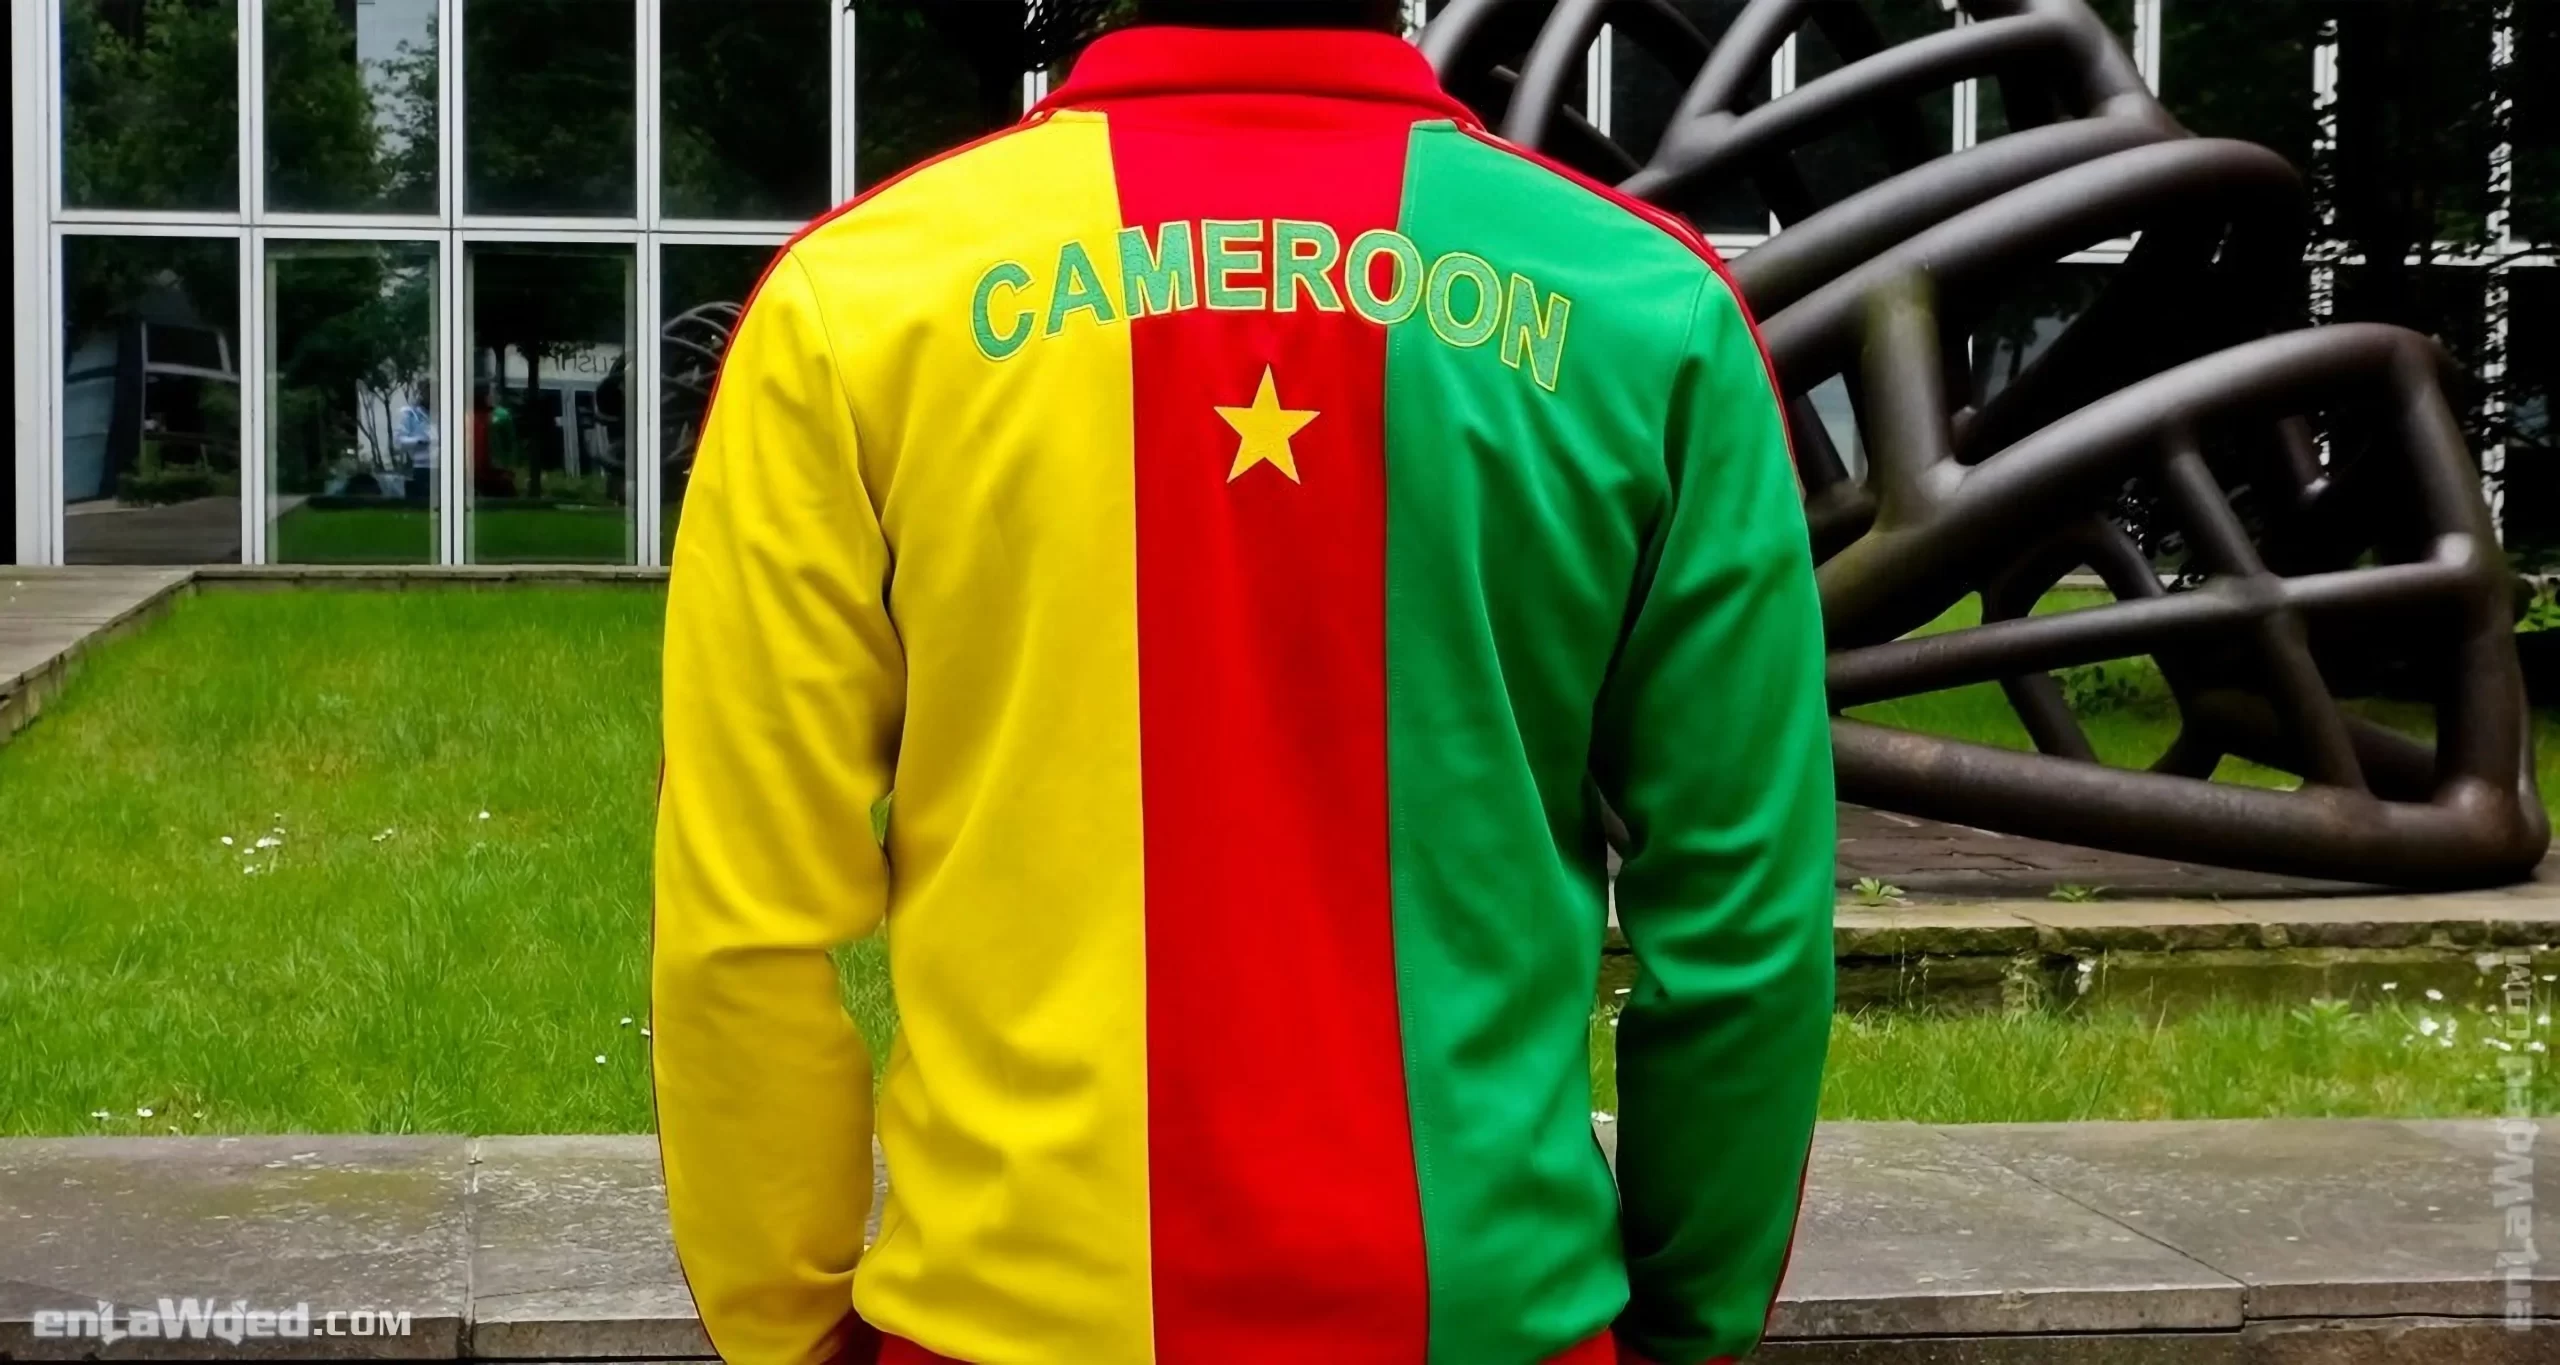 Men’s 2007 Cameroon Track Top by Adidas Originals: Jubilant (EnLawded.com file #lmchk90479ip2y122225kg9st)